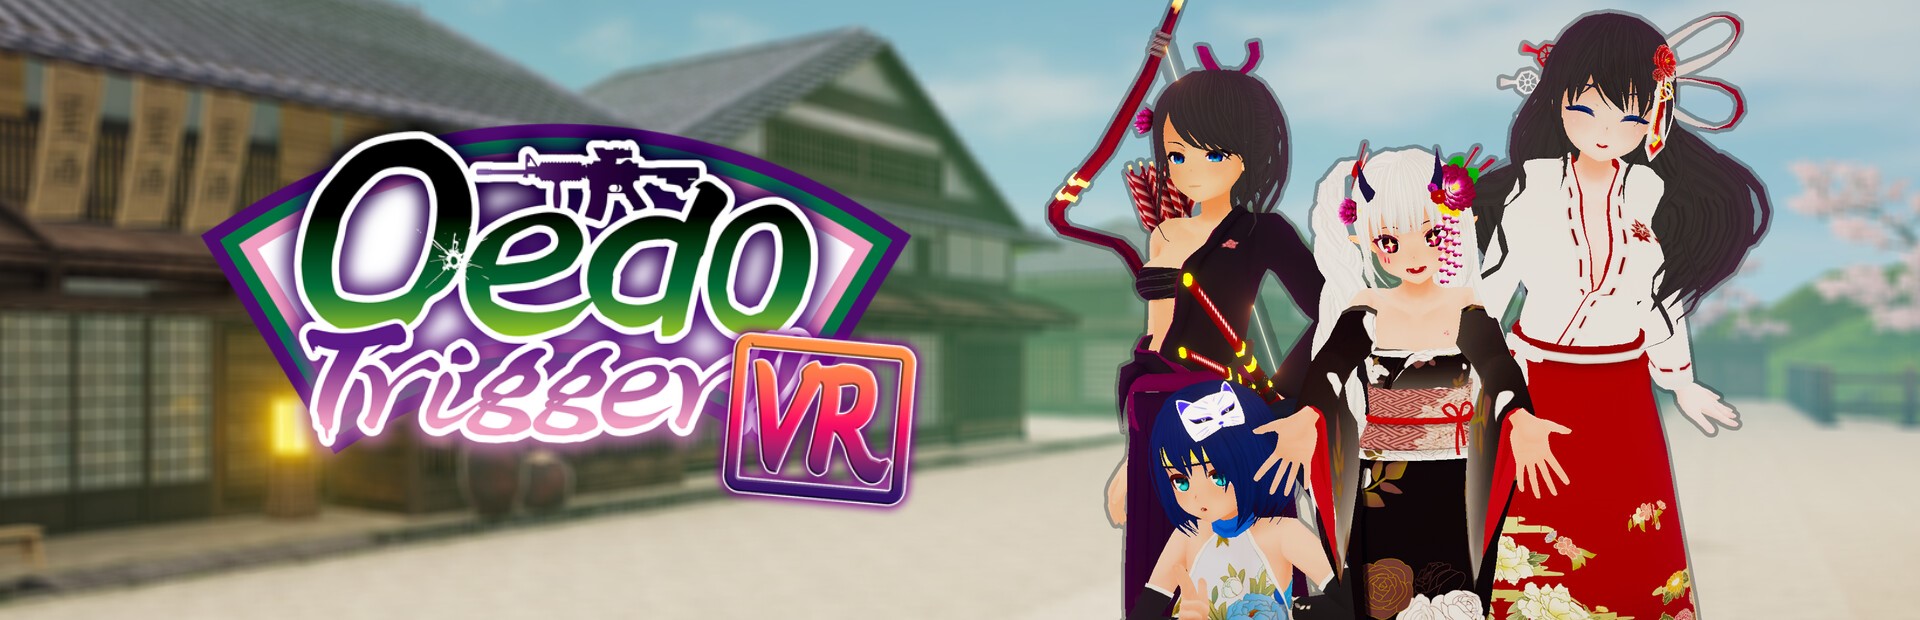 Oedo Trigger VR!! poster